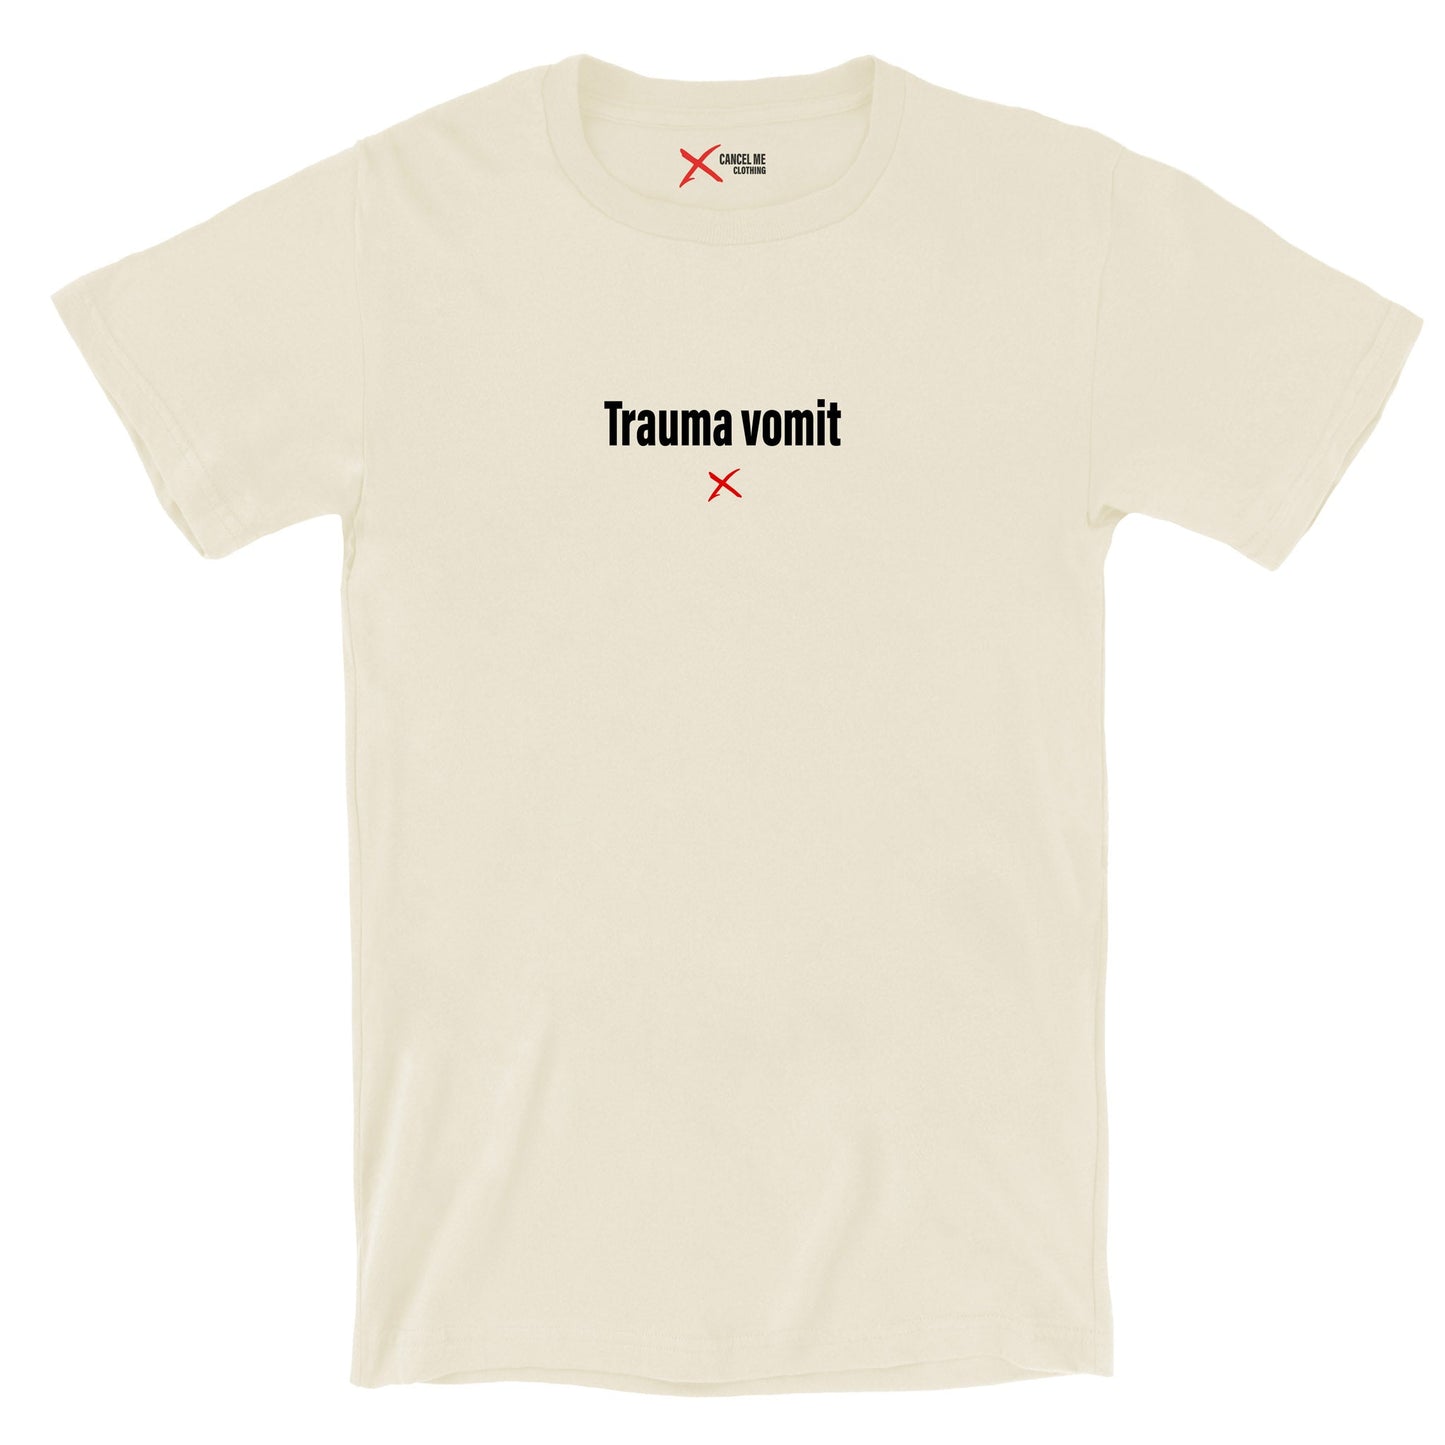 Trauma vomit - Shirt